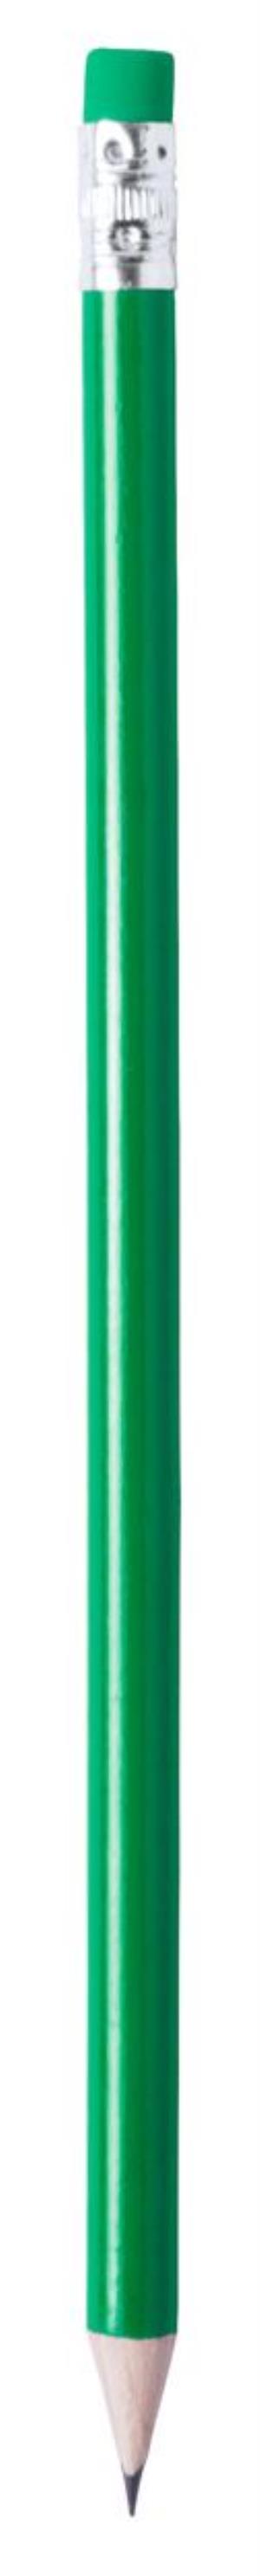 Drevená ceruzka Melart, zelená